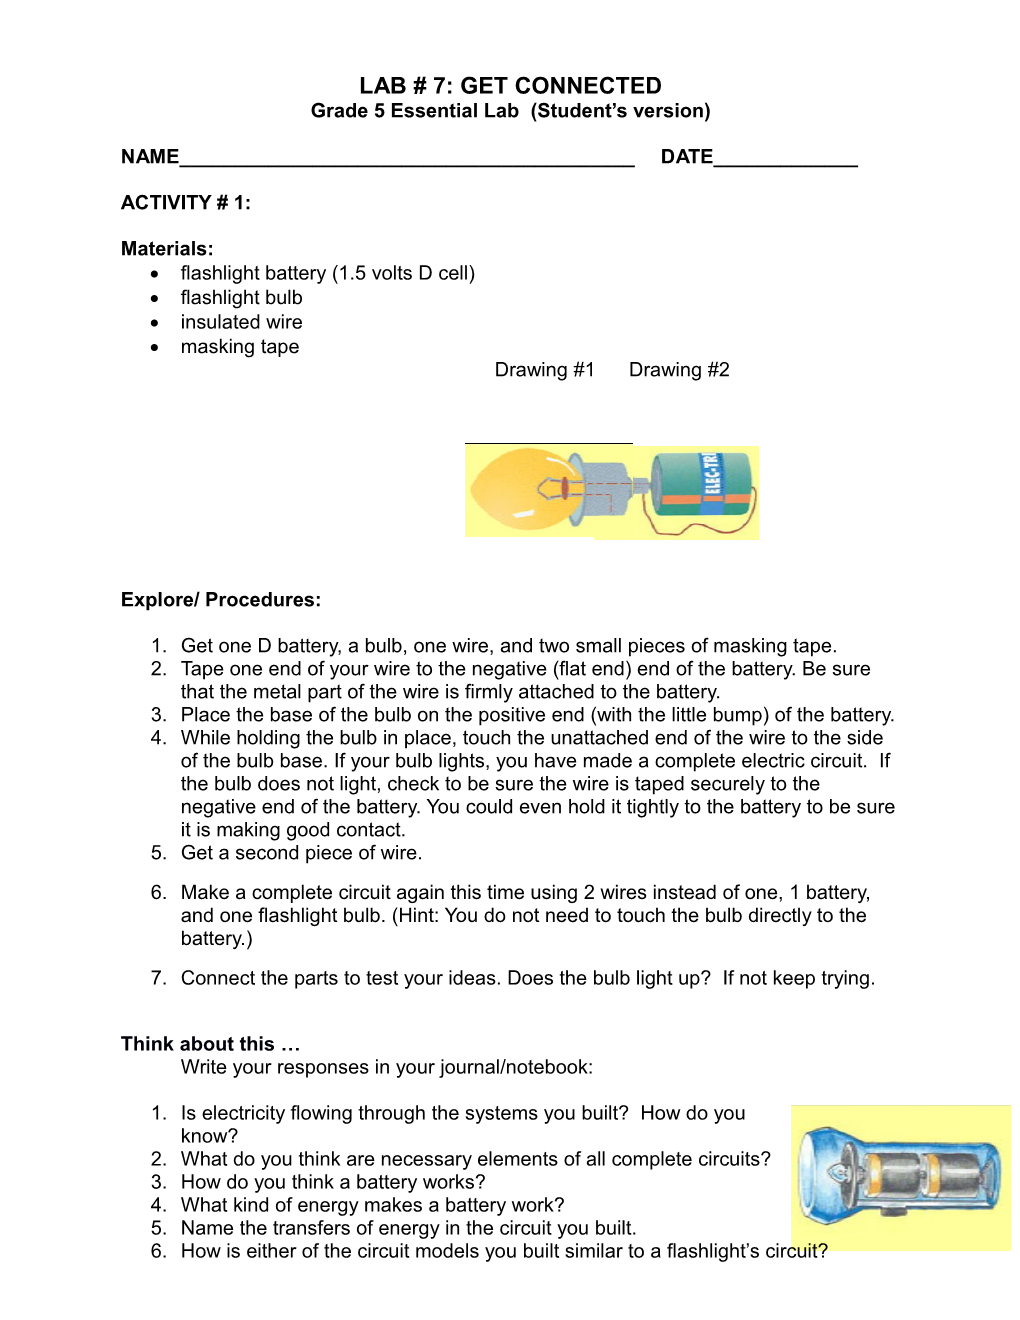 Grade 5 Essential Lab (Student S Version)